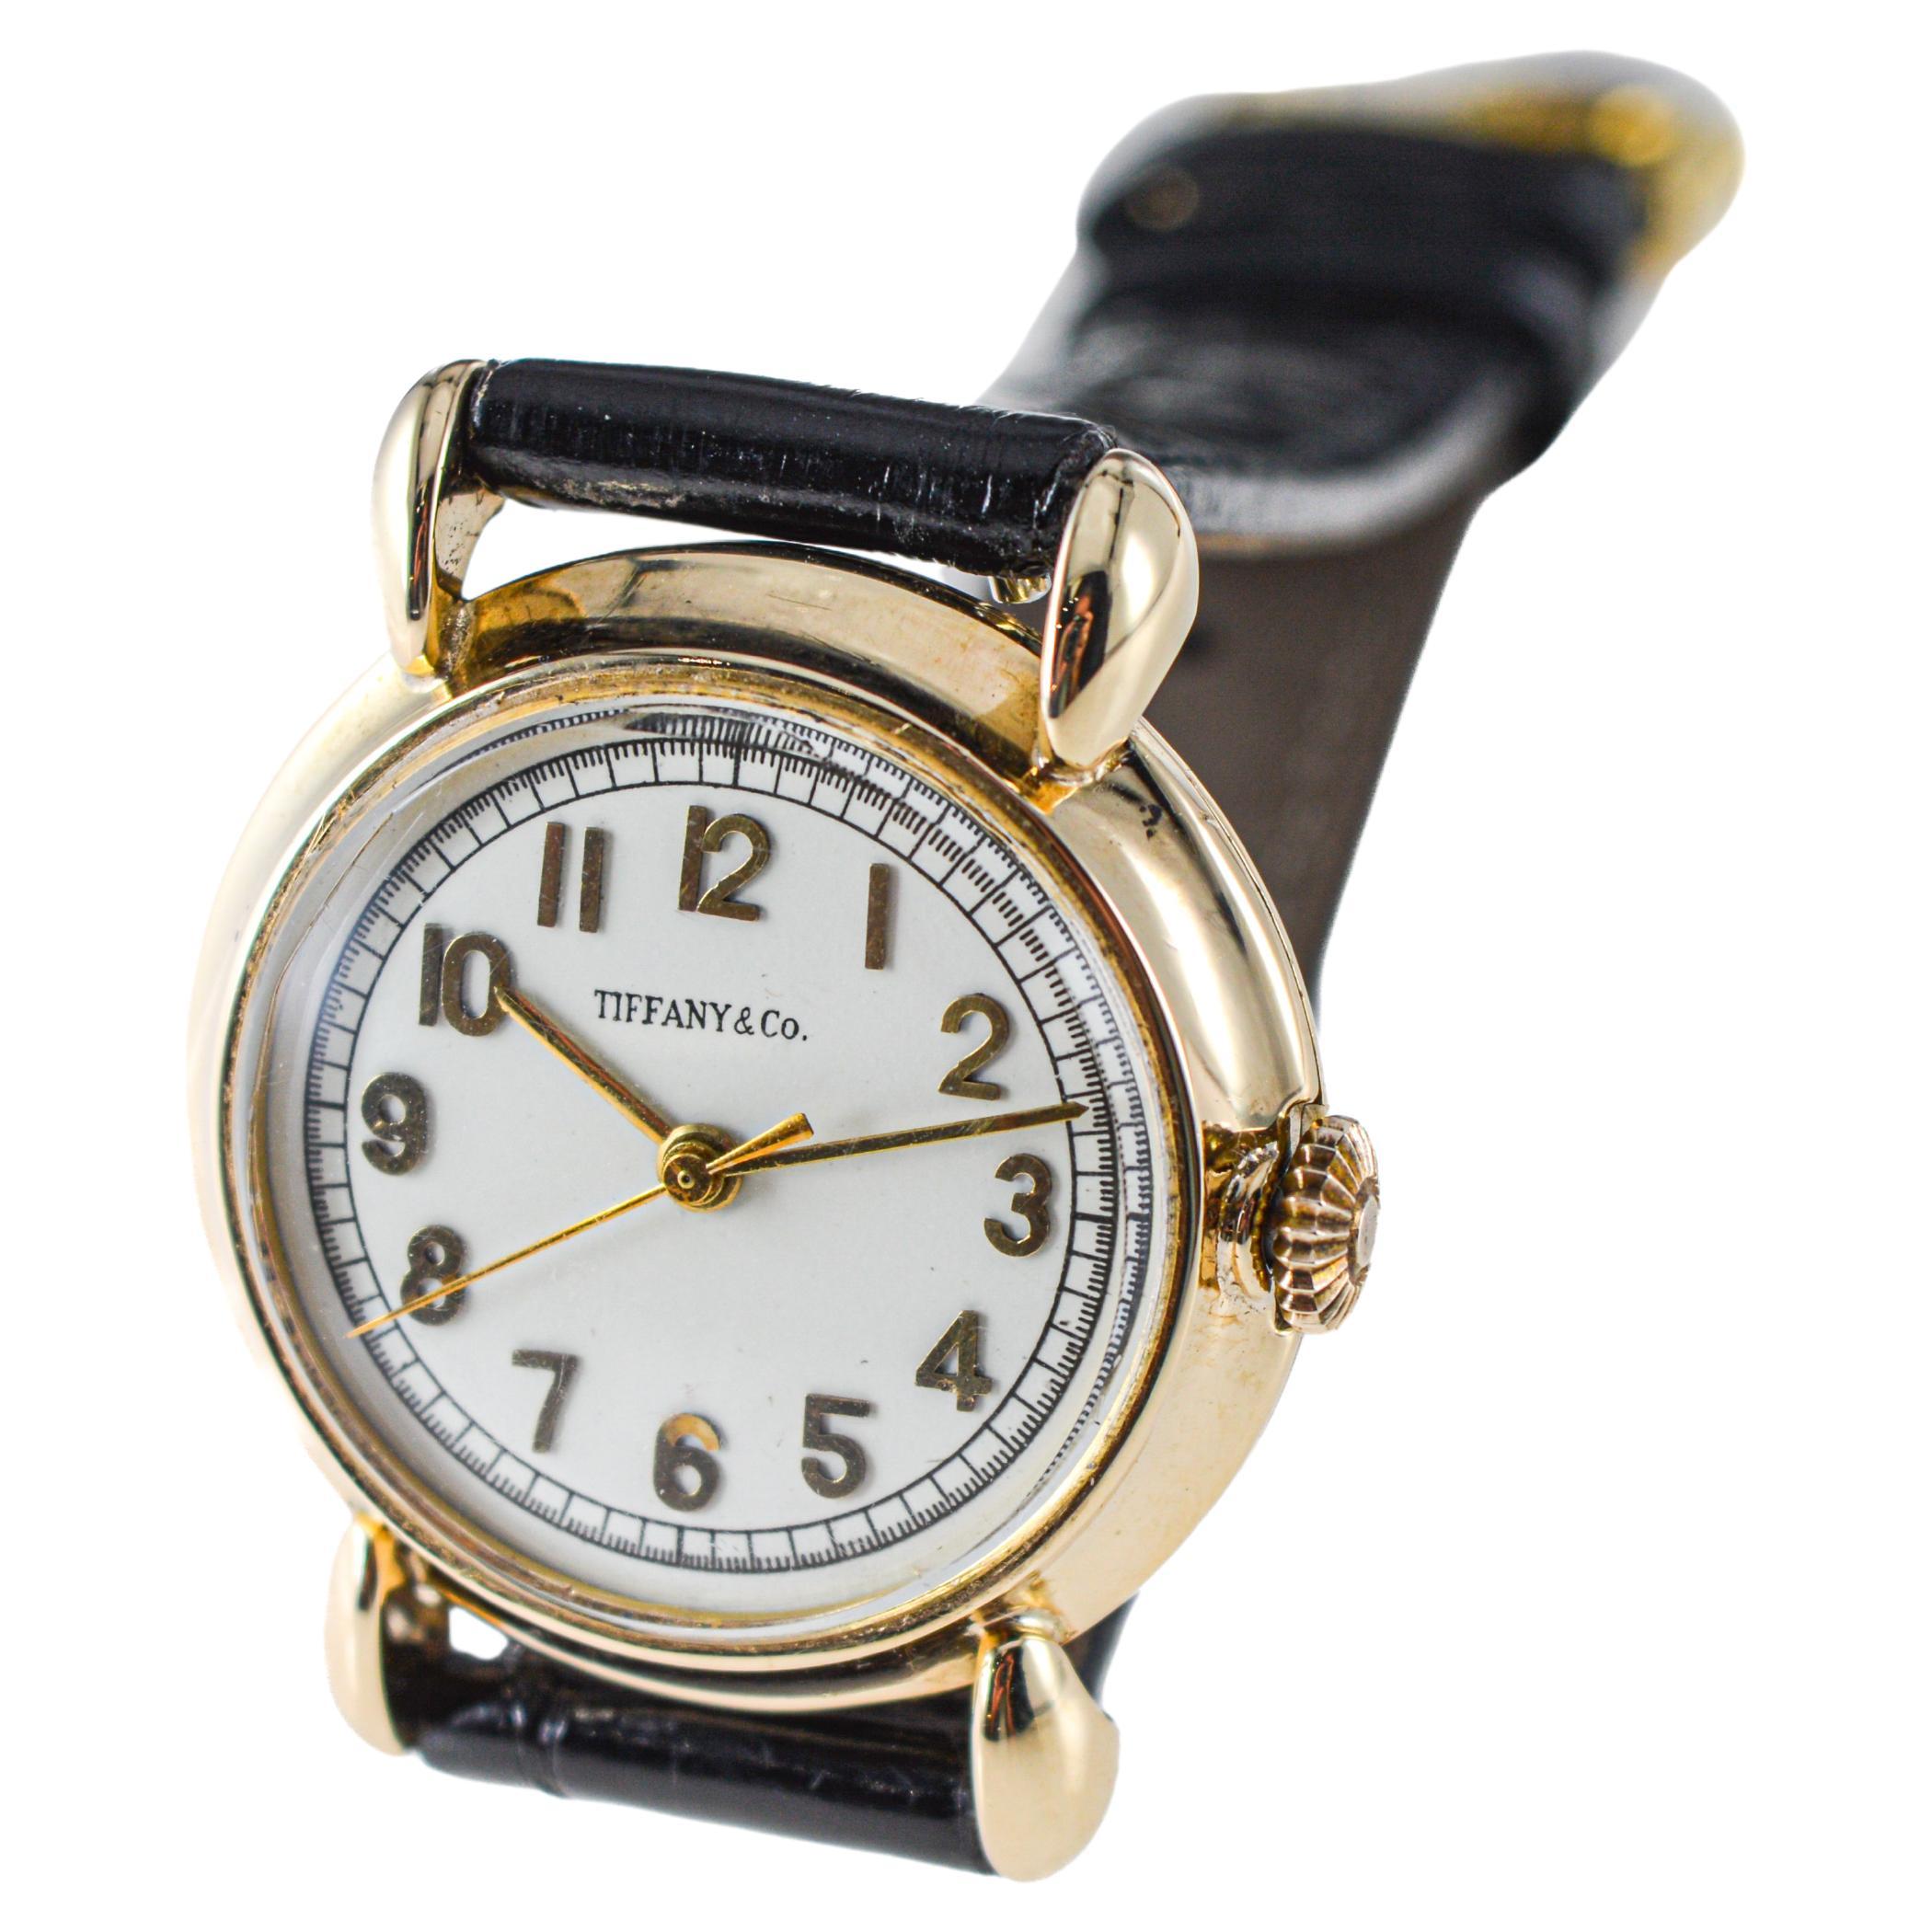 Tiffany & Co. by Schaffhausen International Watch Company Art Deco Style Watch For Sale 8